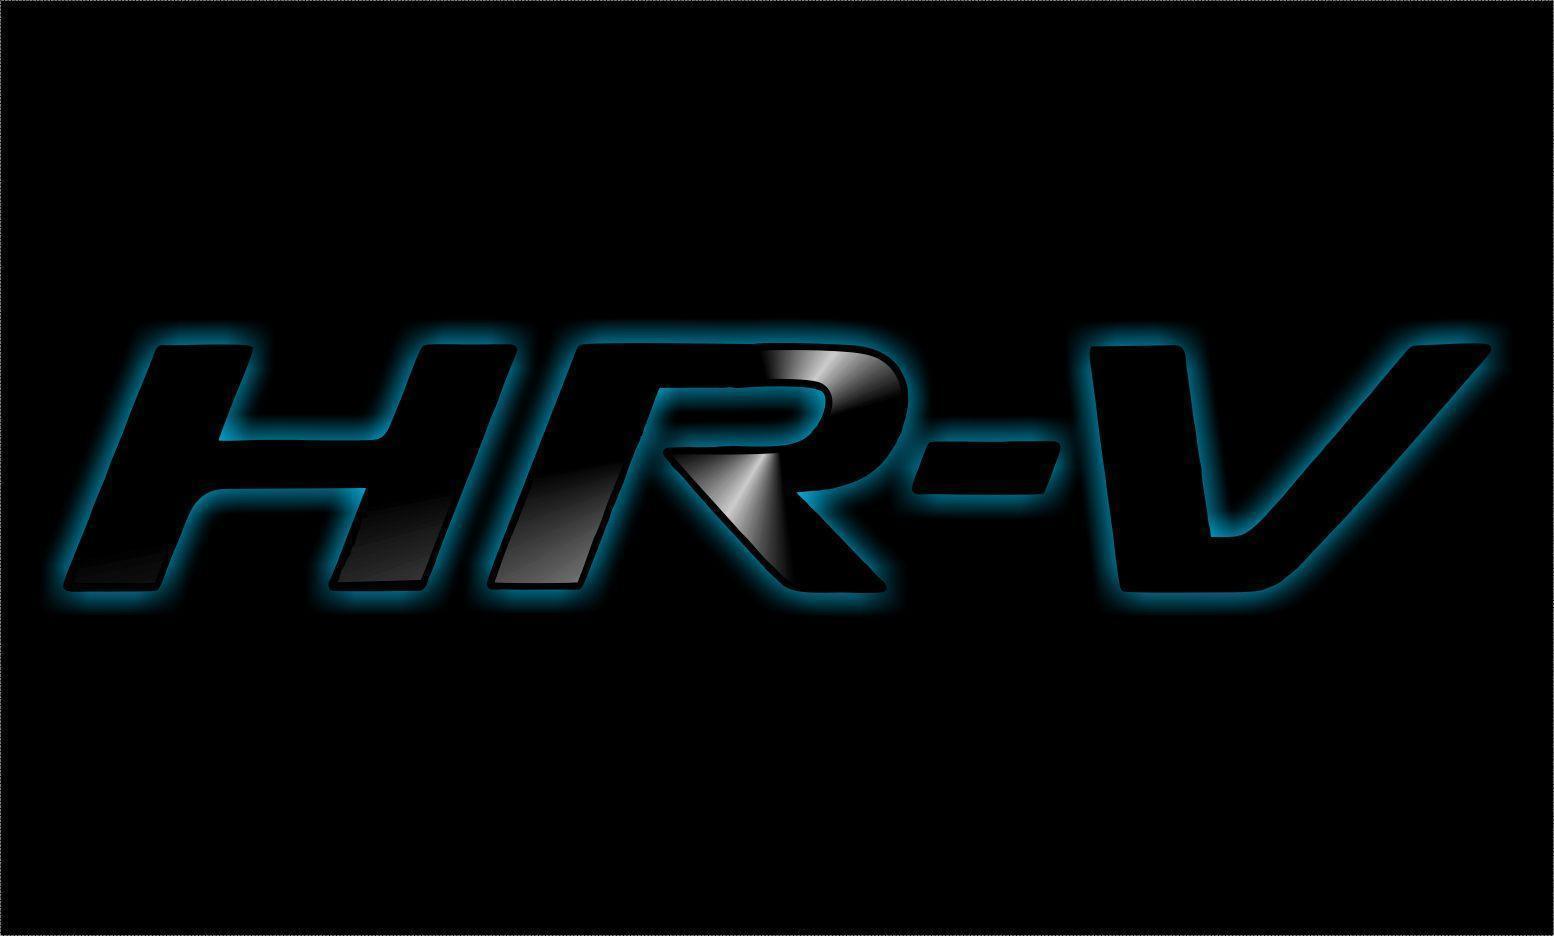 Hr-V Logo - Honda HR-V Wallpapers - Wallpaper Cave